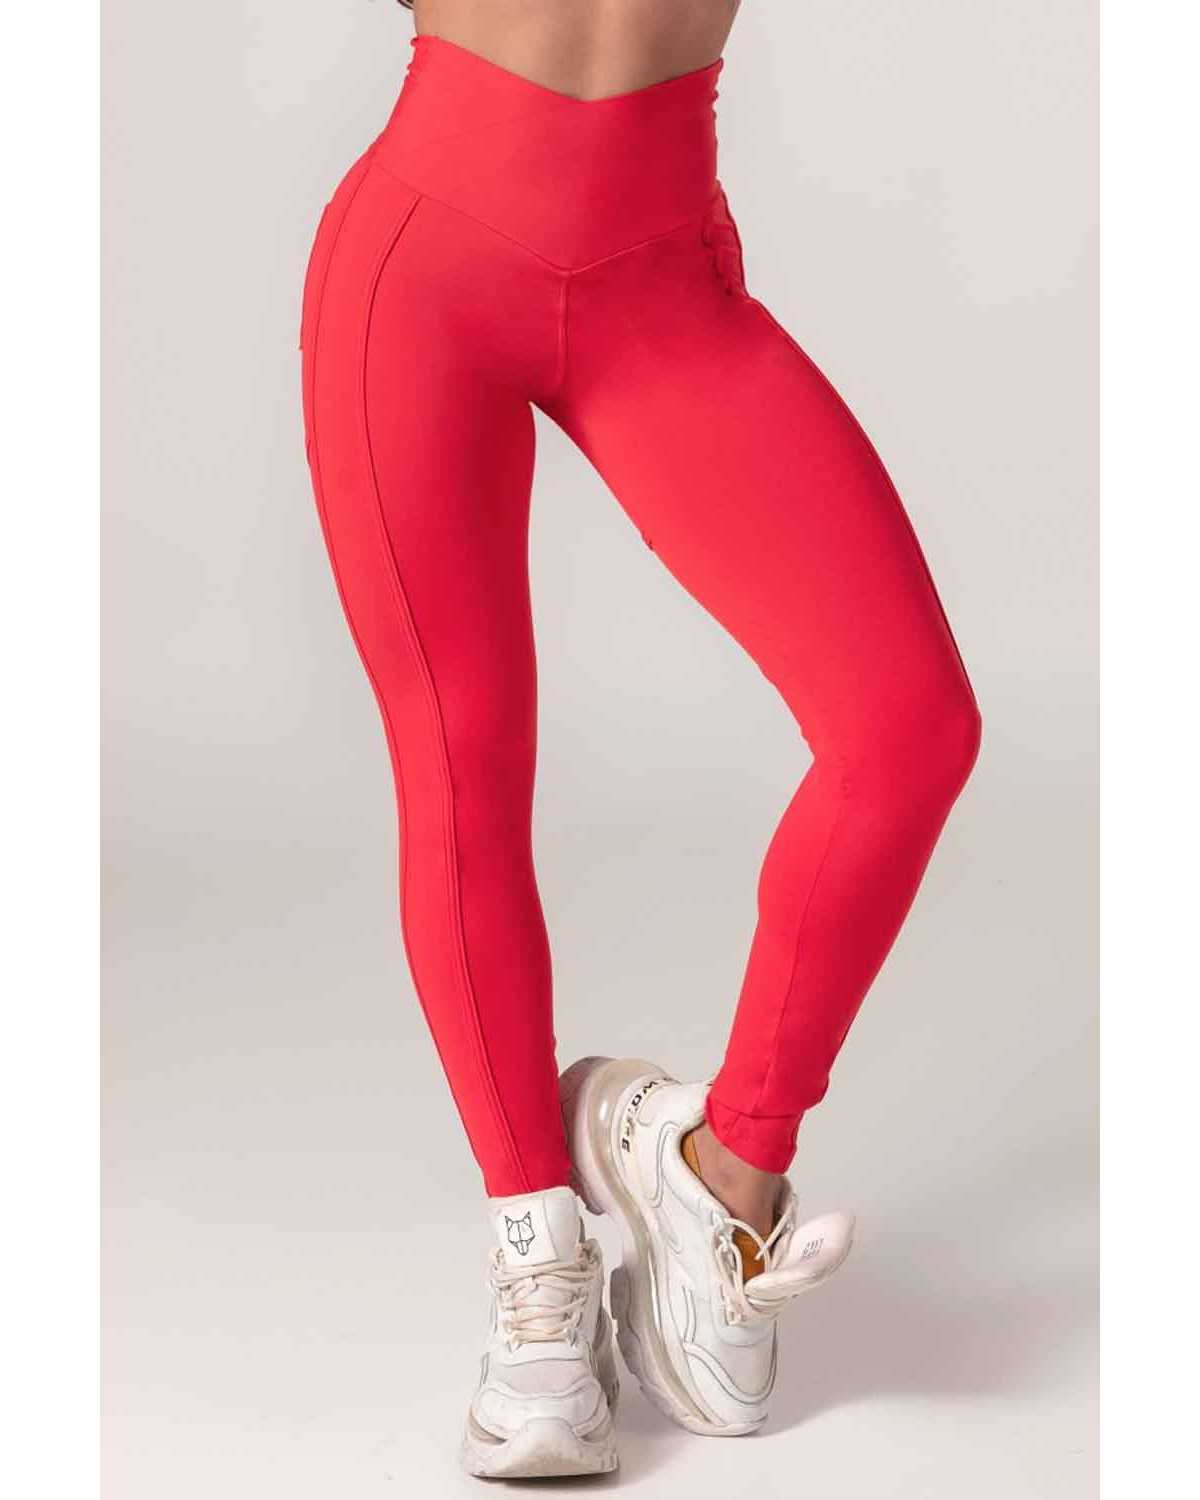 https://www.donnashape.com/115599-large_default/legging-amazing-fitness-vermelha-cos-largo.jpg